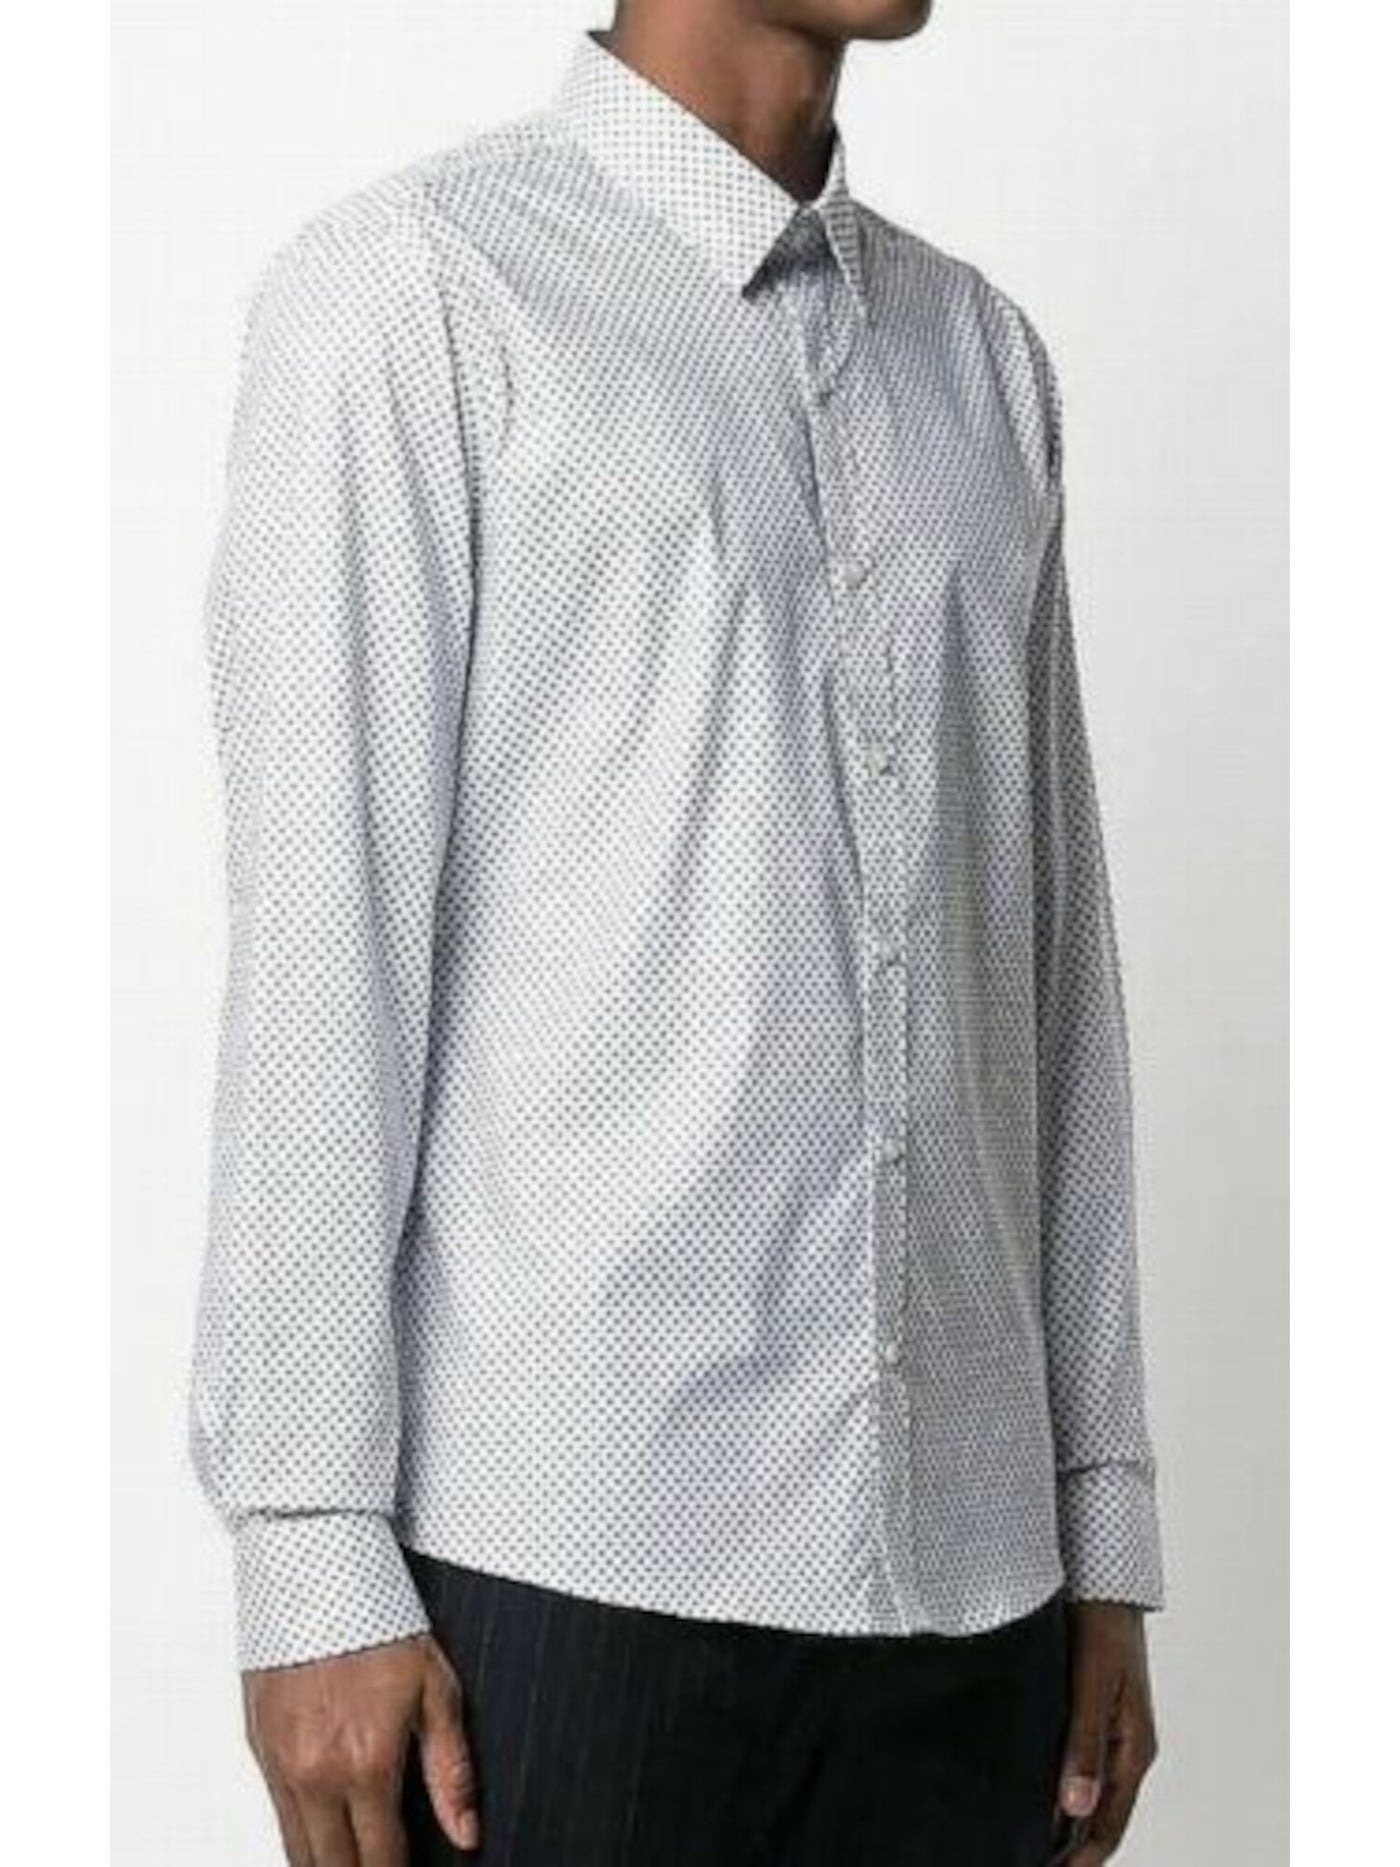 MICHAEL KORS Mens White Printed Button Down Casual Shirt S